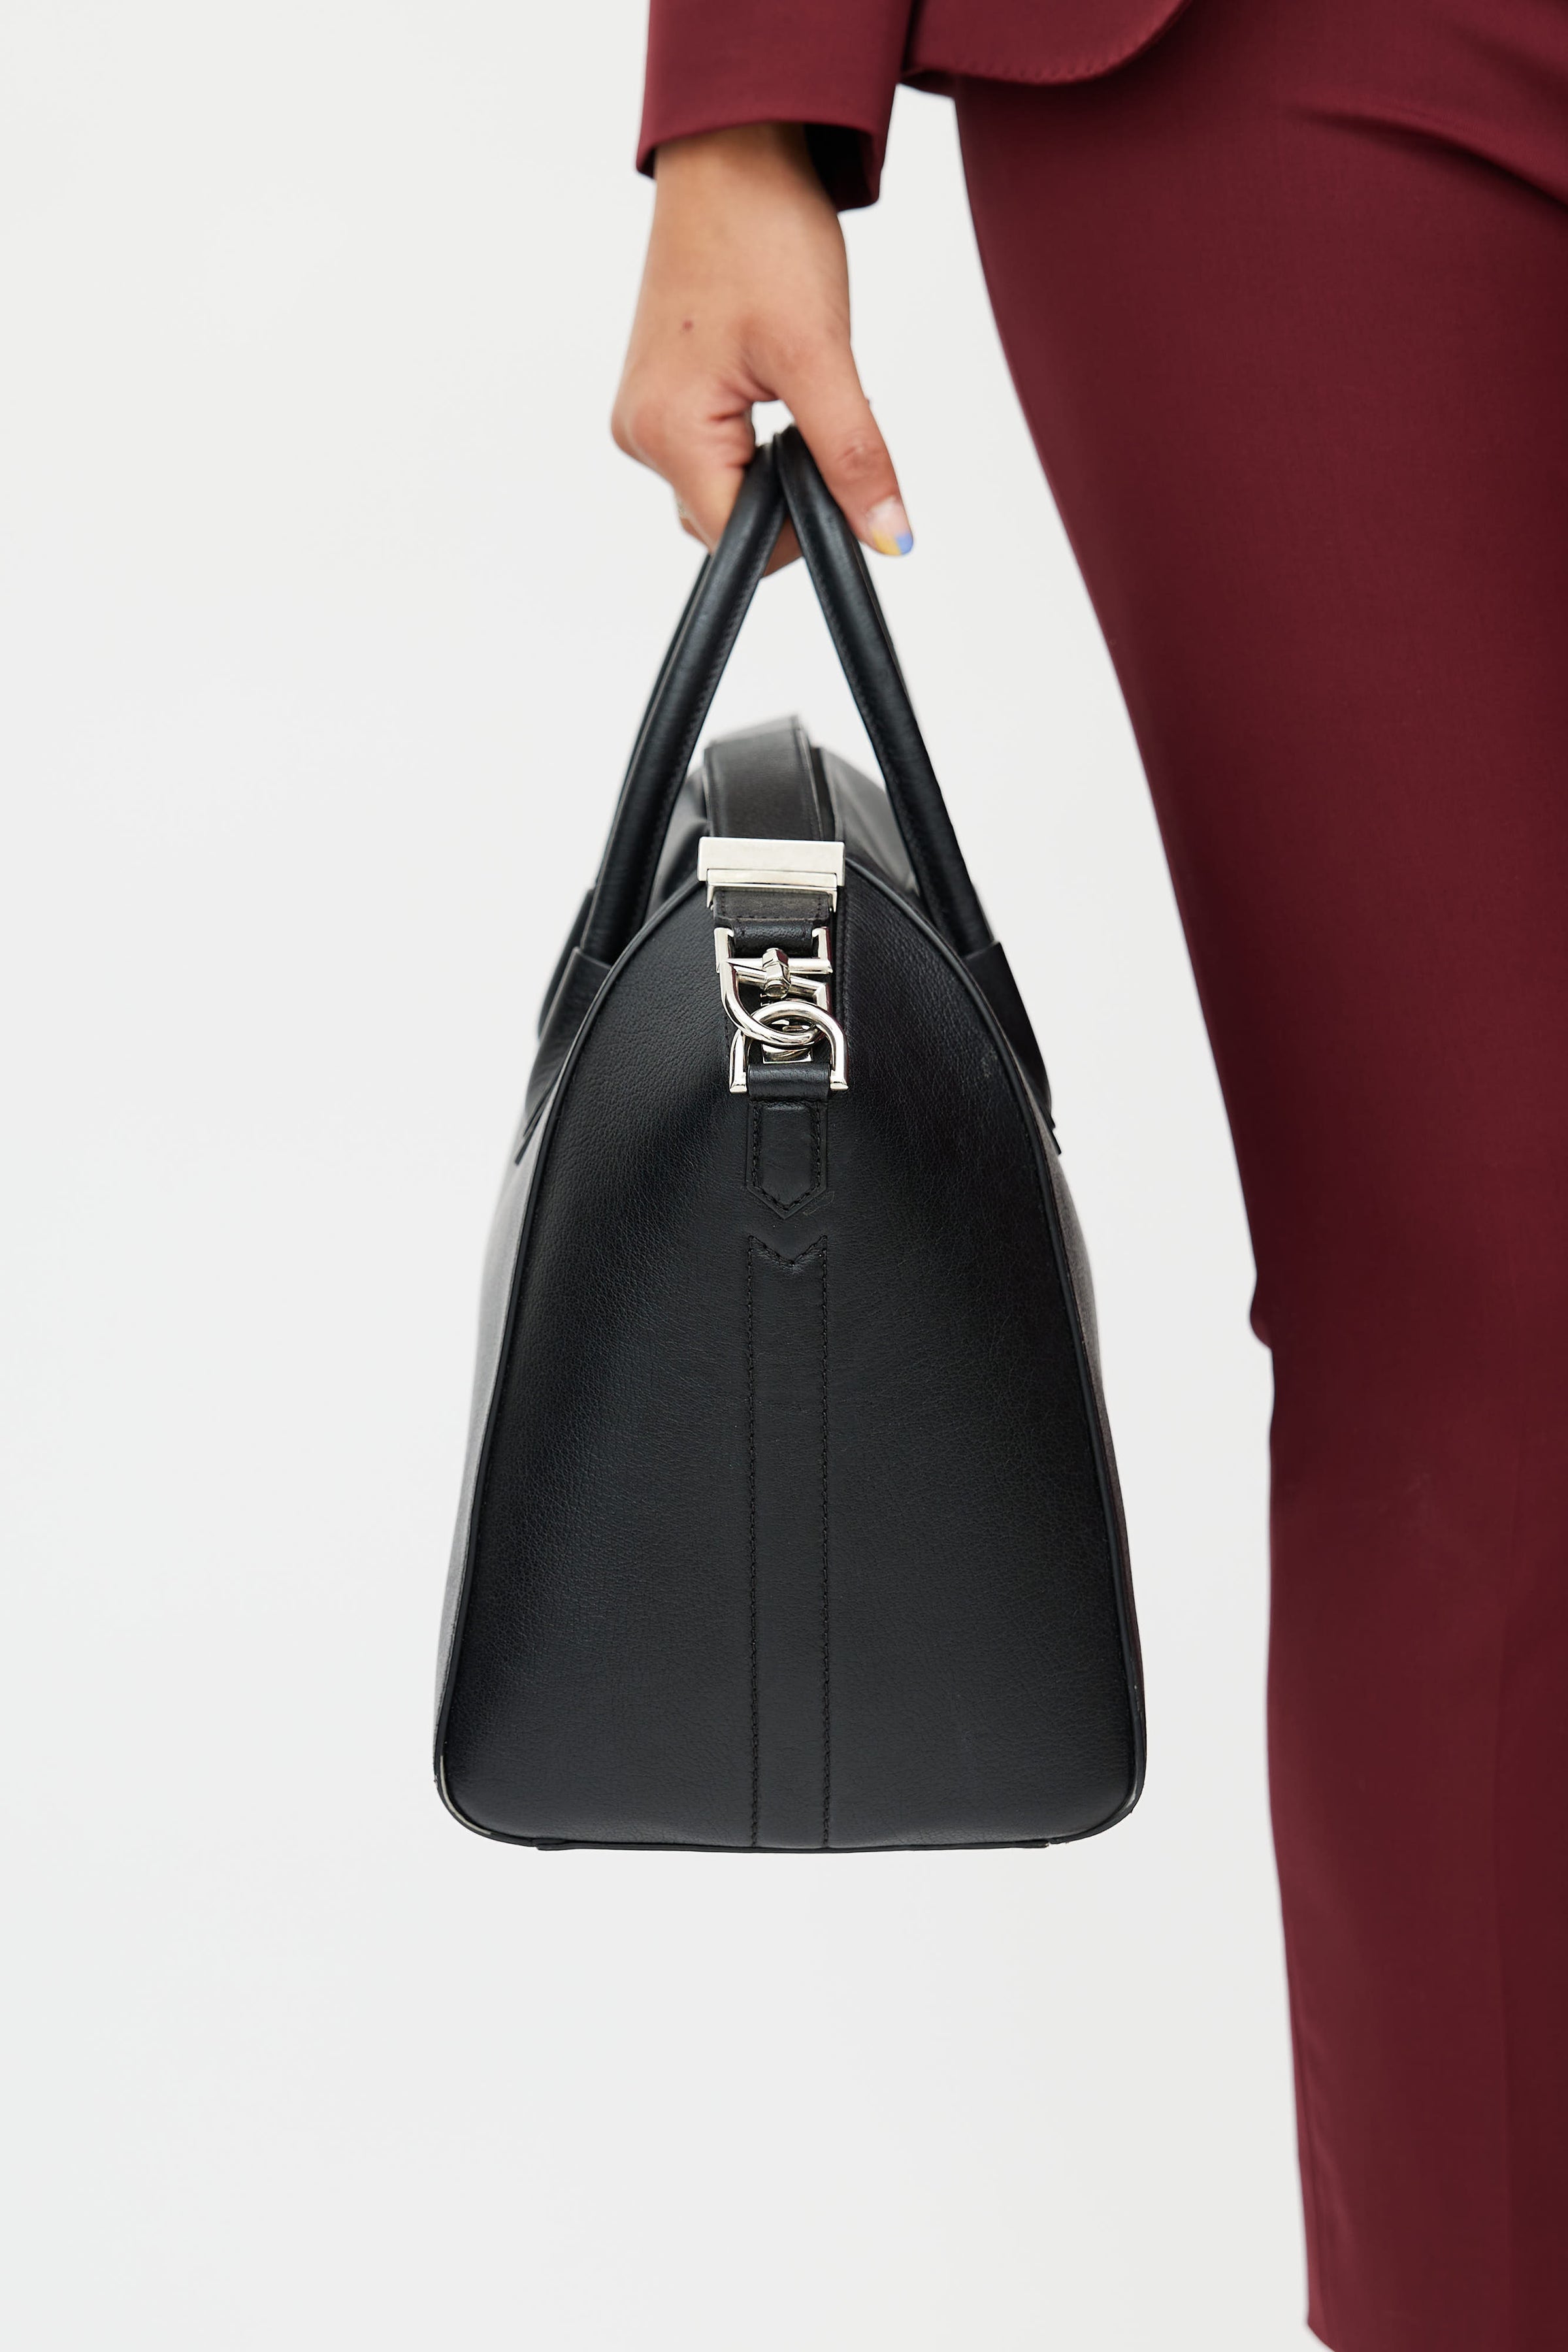 Givenchy Medium Antigona Handbag